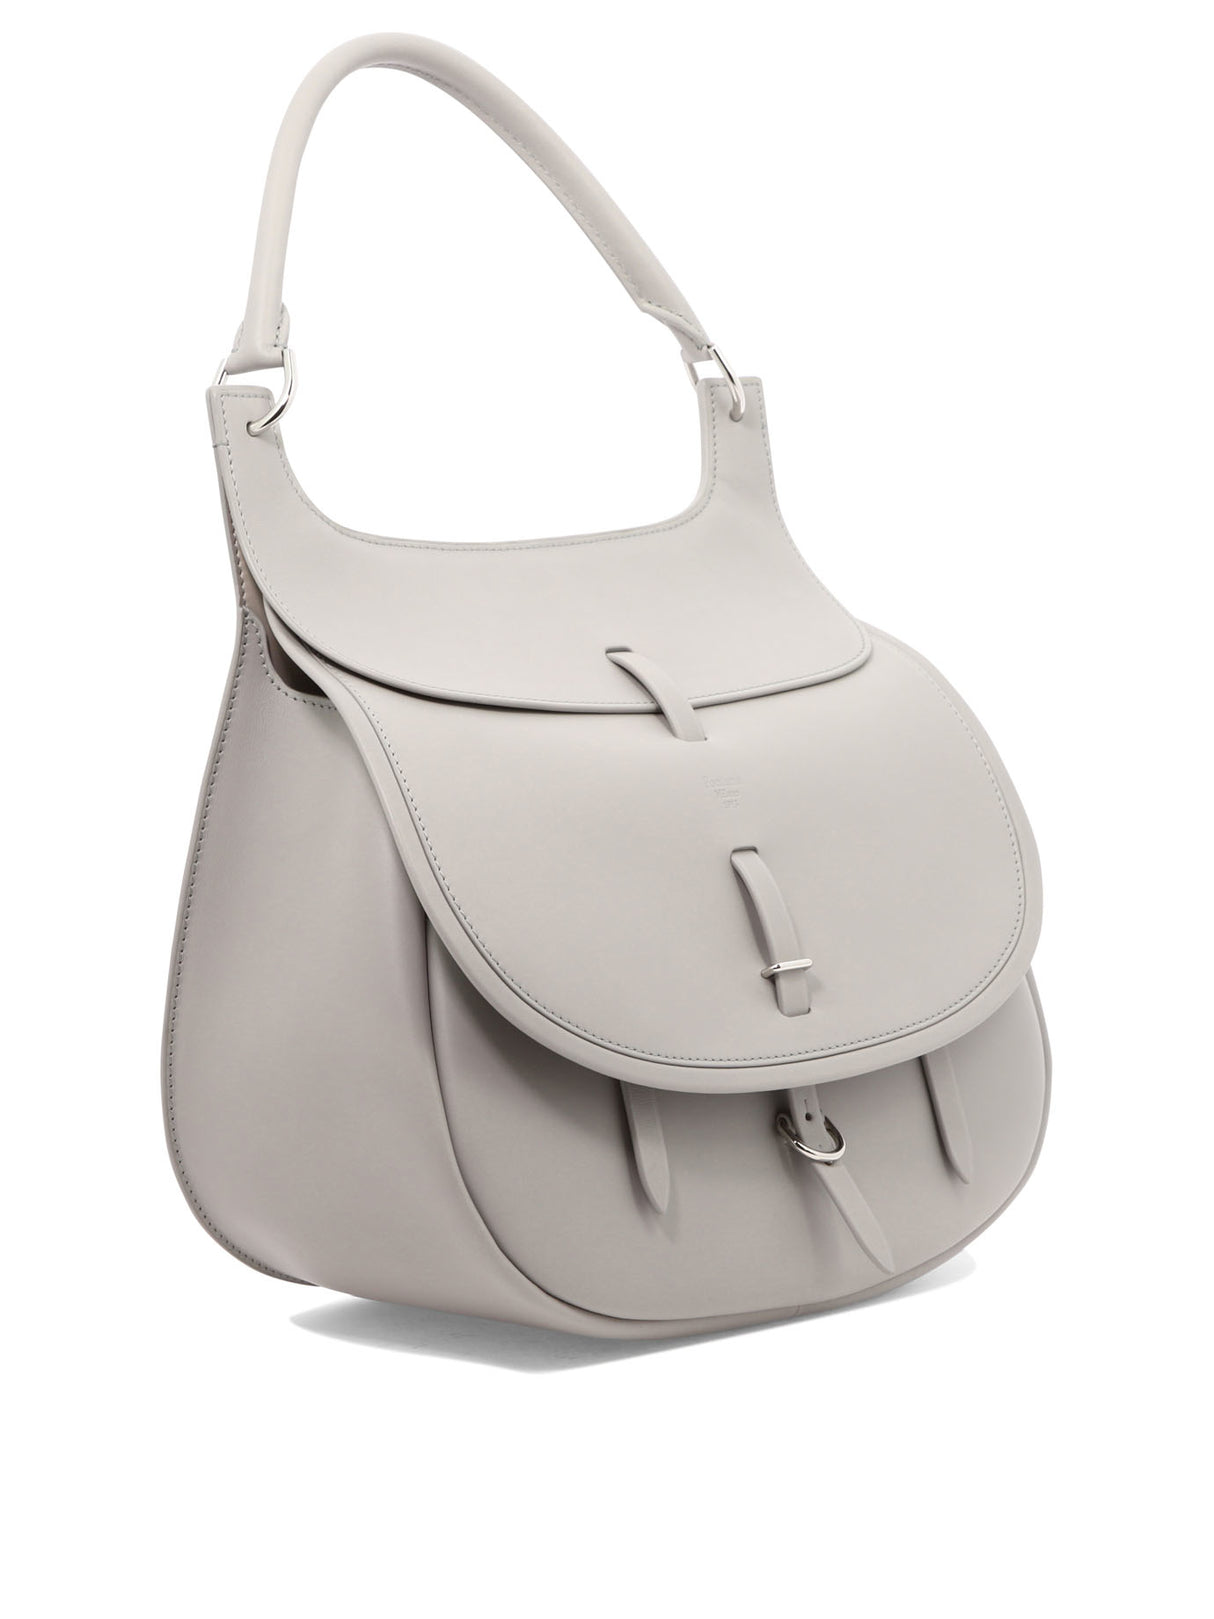 FONTANA MILANO 1915 Luxurious Grey Shoulder Handbag for Women